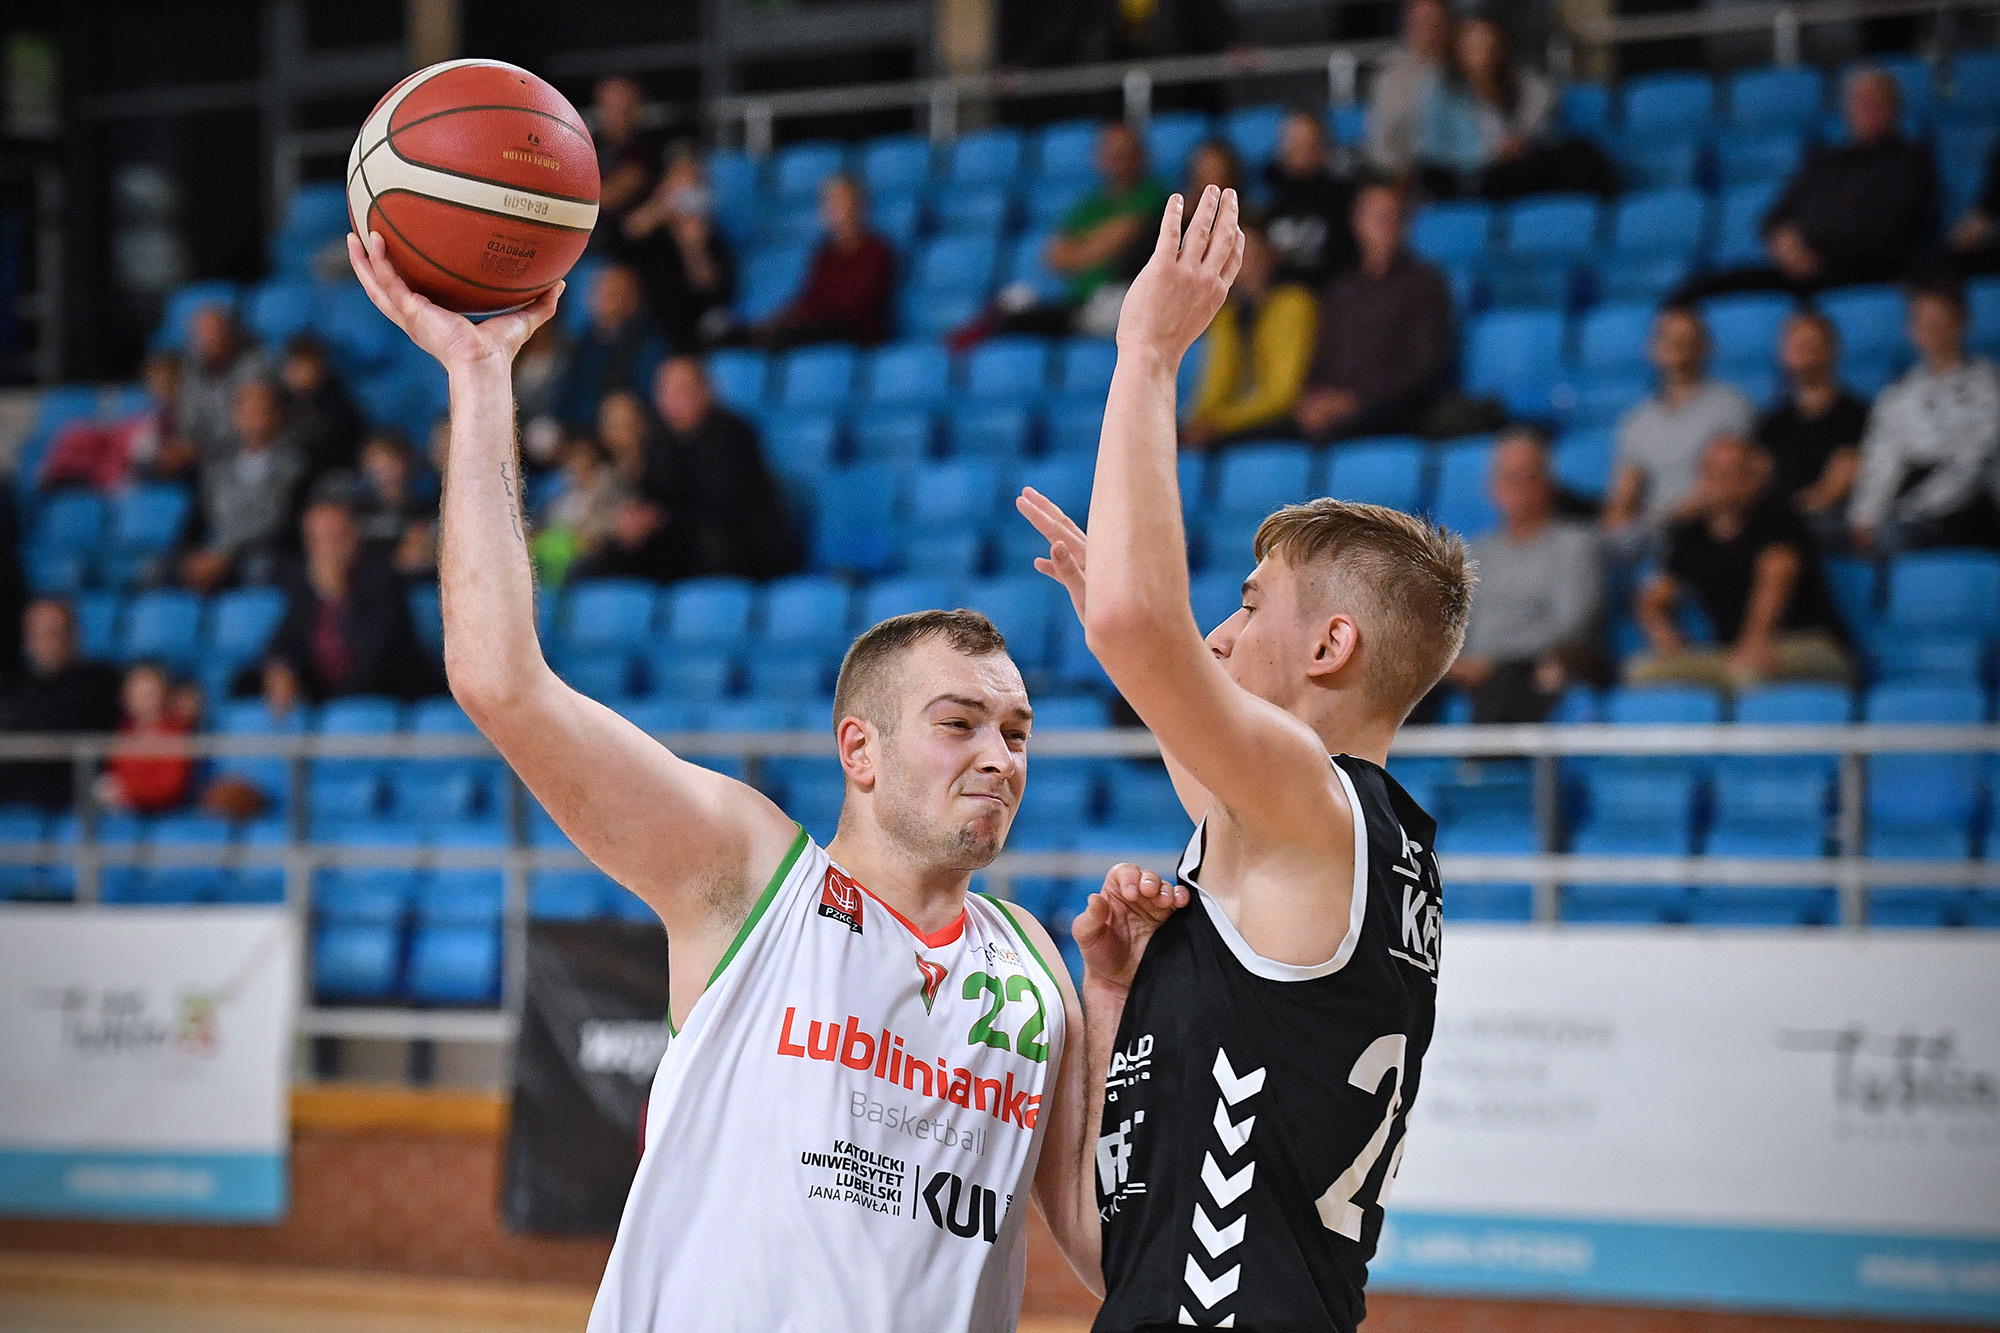 Lublinianka KUL Basketball